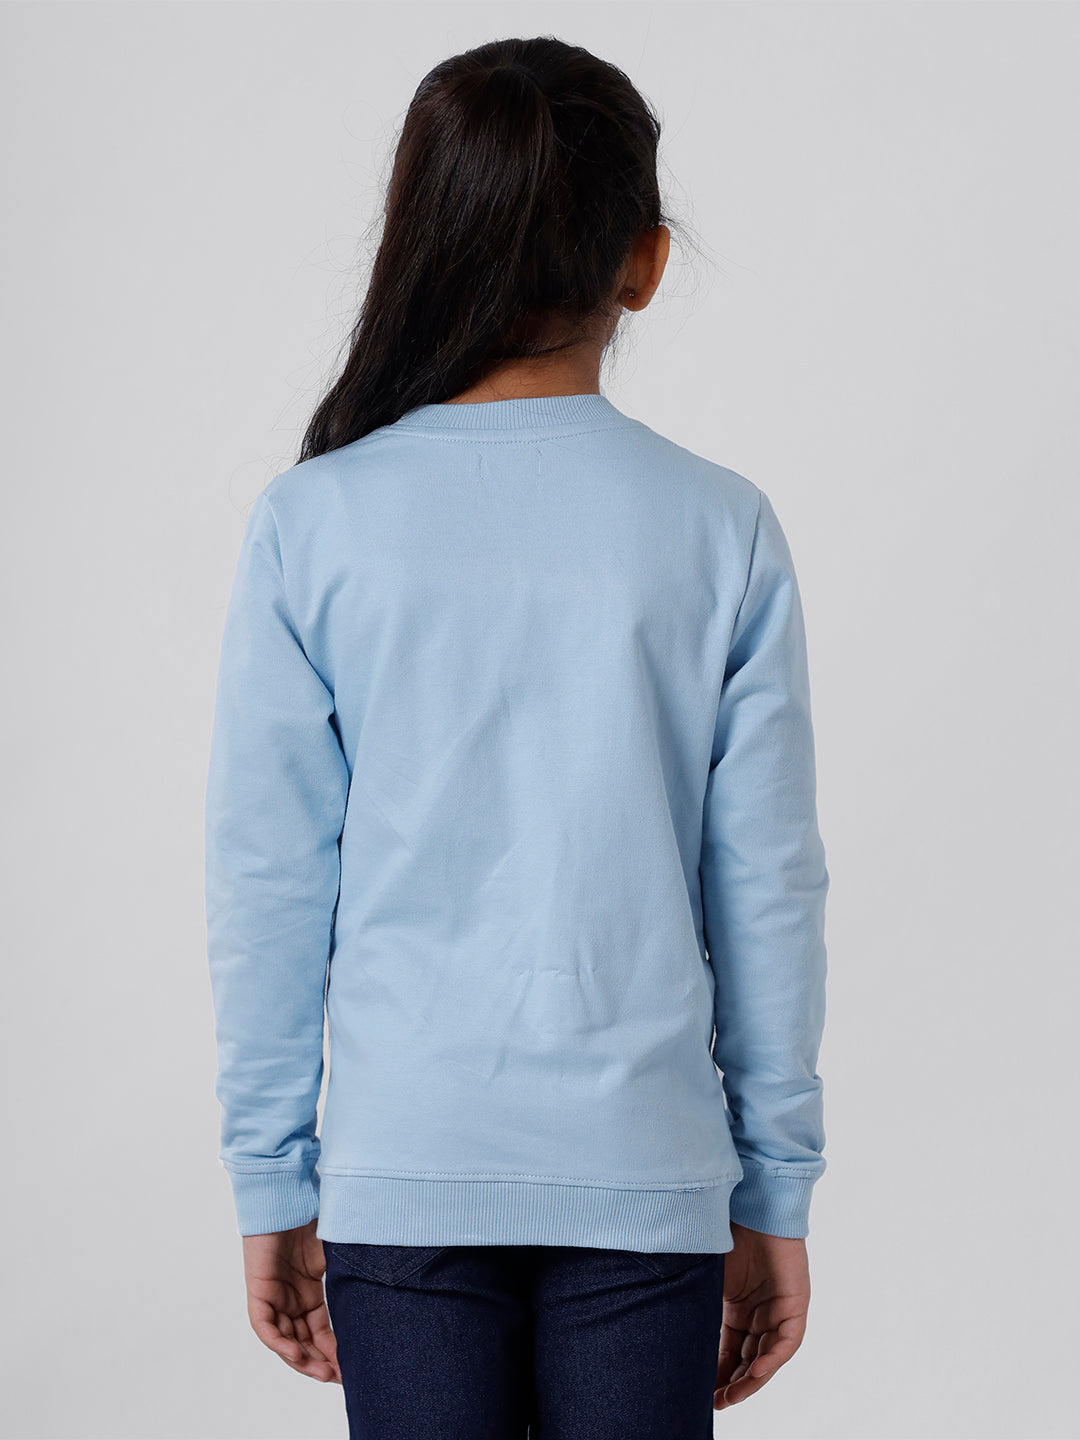 Kids - Girls Sweatshirt Light Blue - De Moza